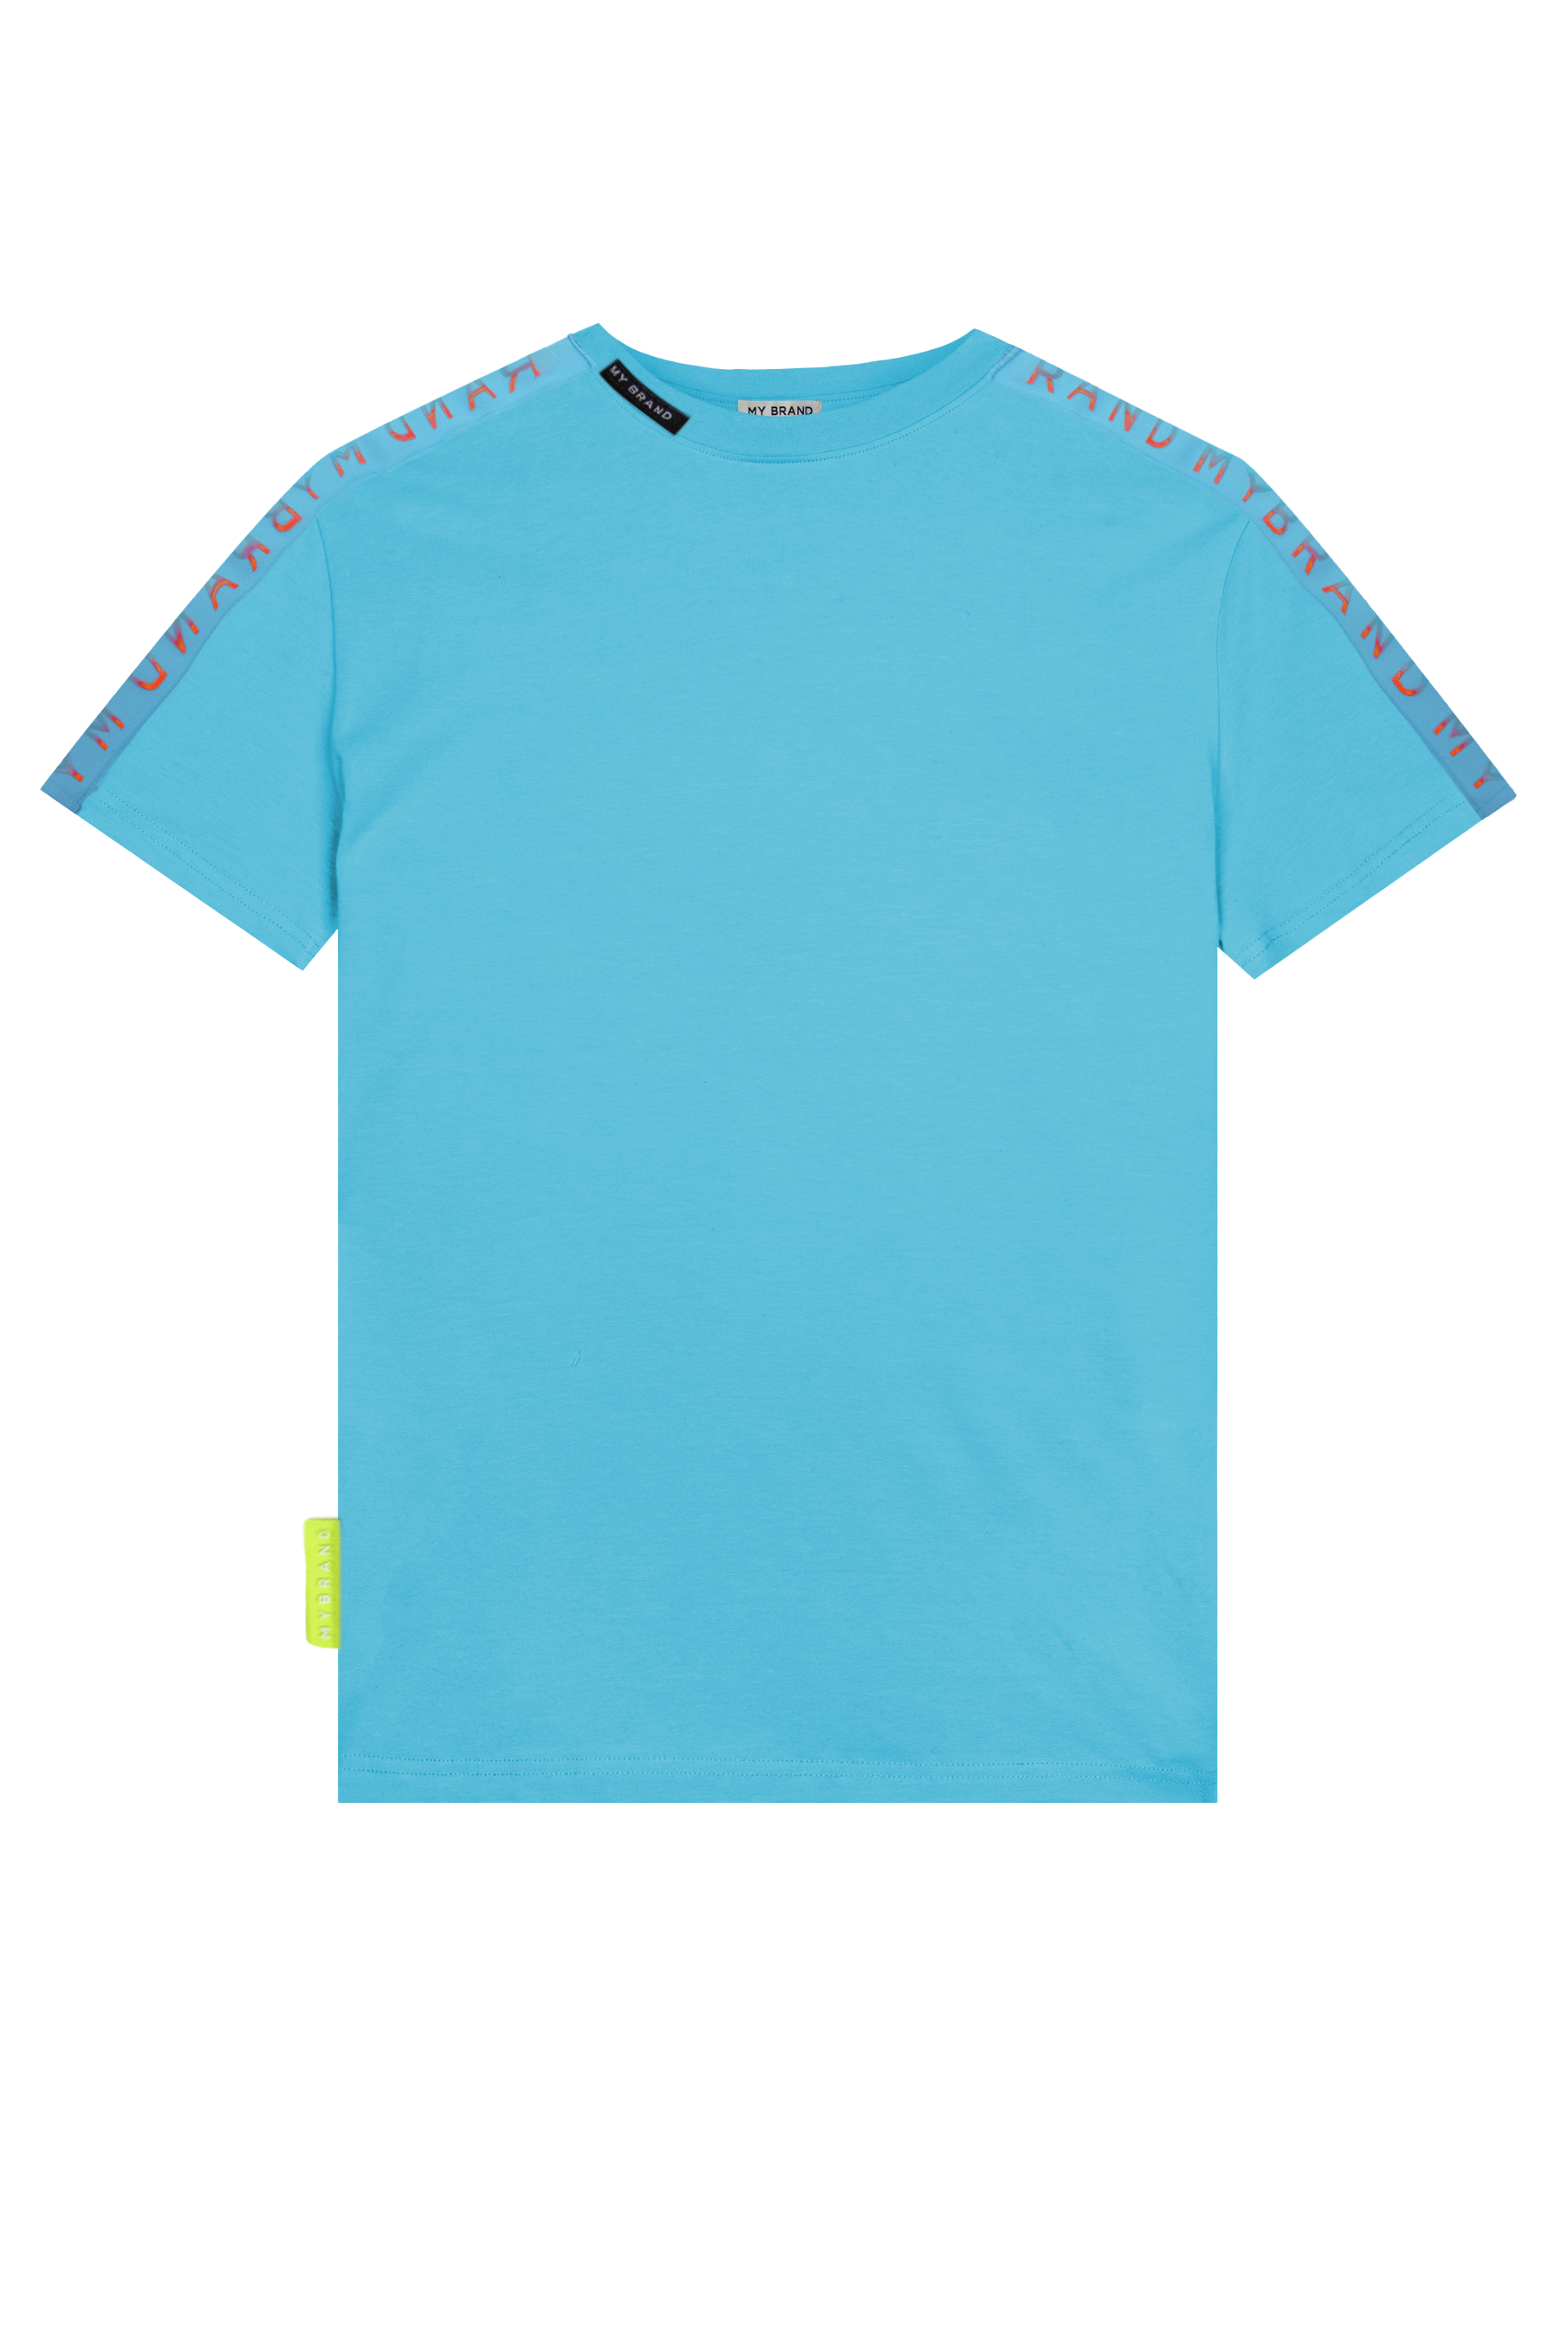 MB Gradient T-Shirt Bluefish